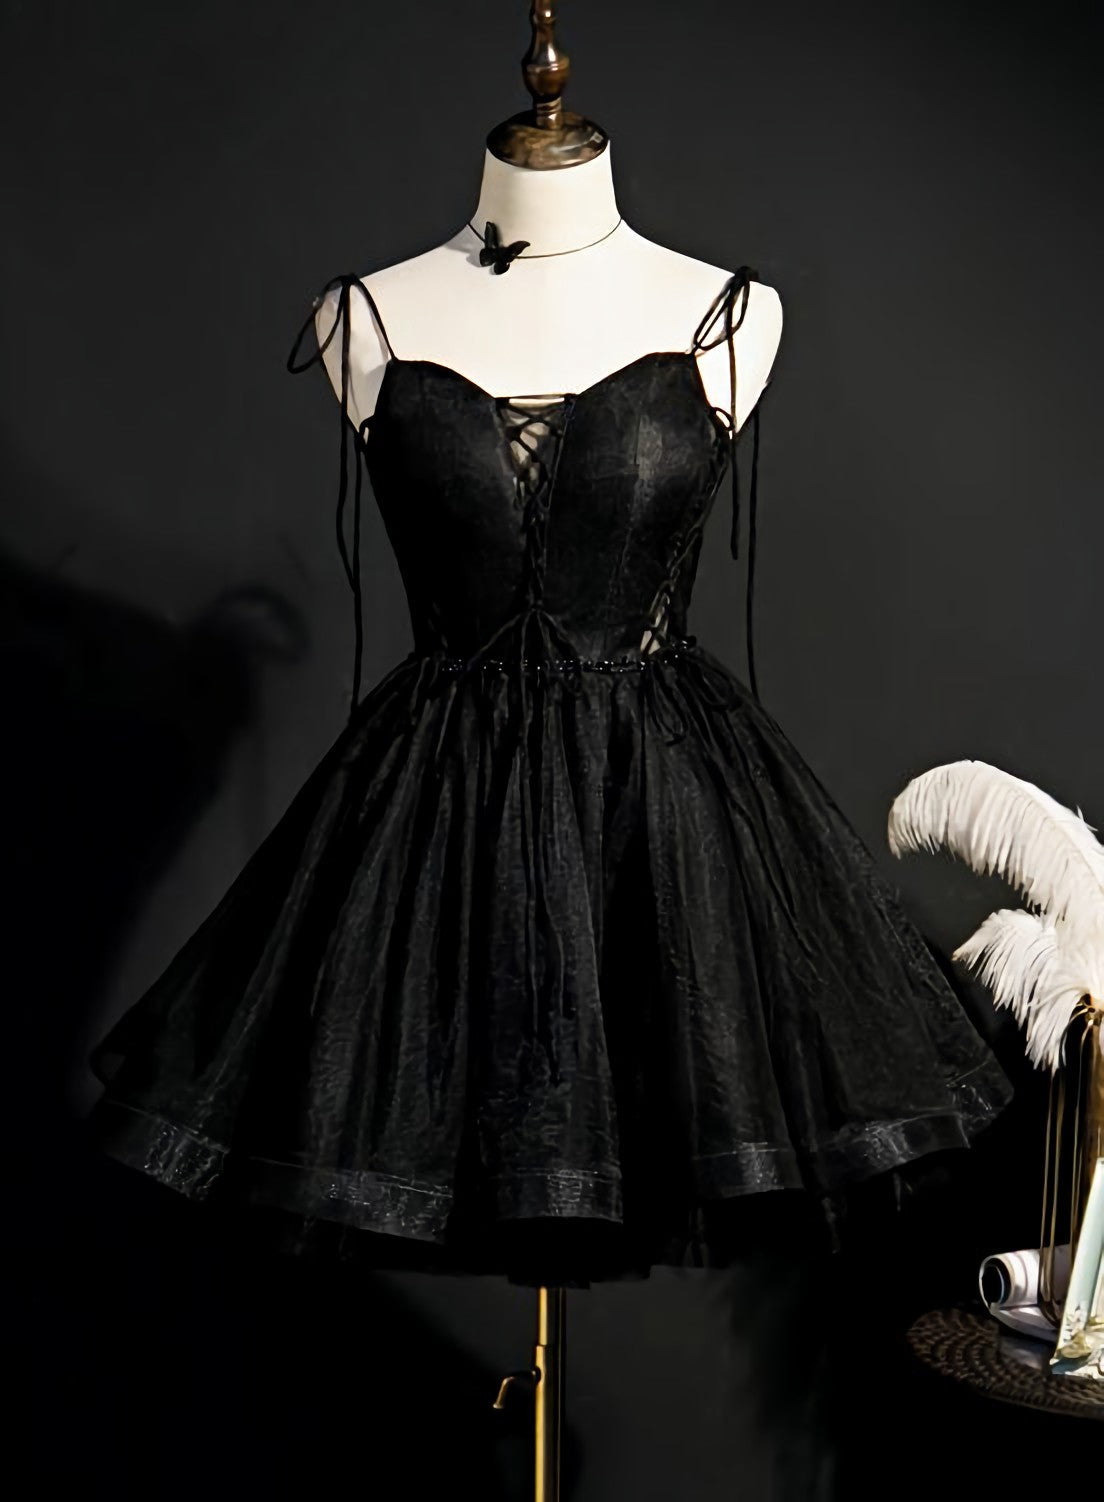 Black Straps Tulle Short Homecoming Dress, Prom Dress, Little Black Party Dresses